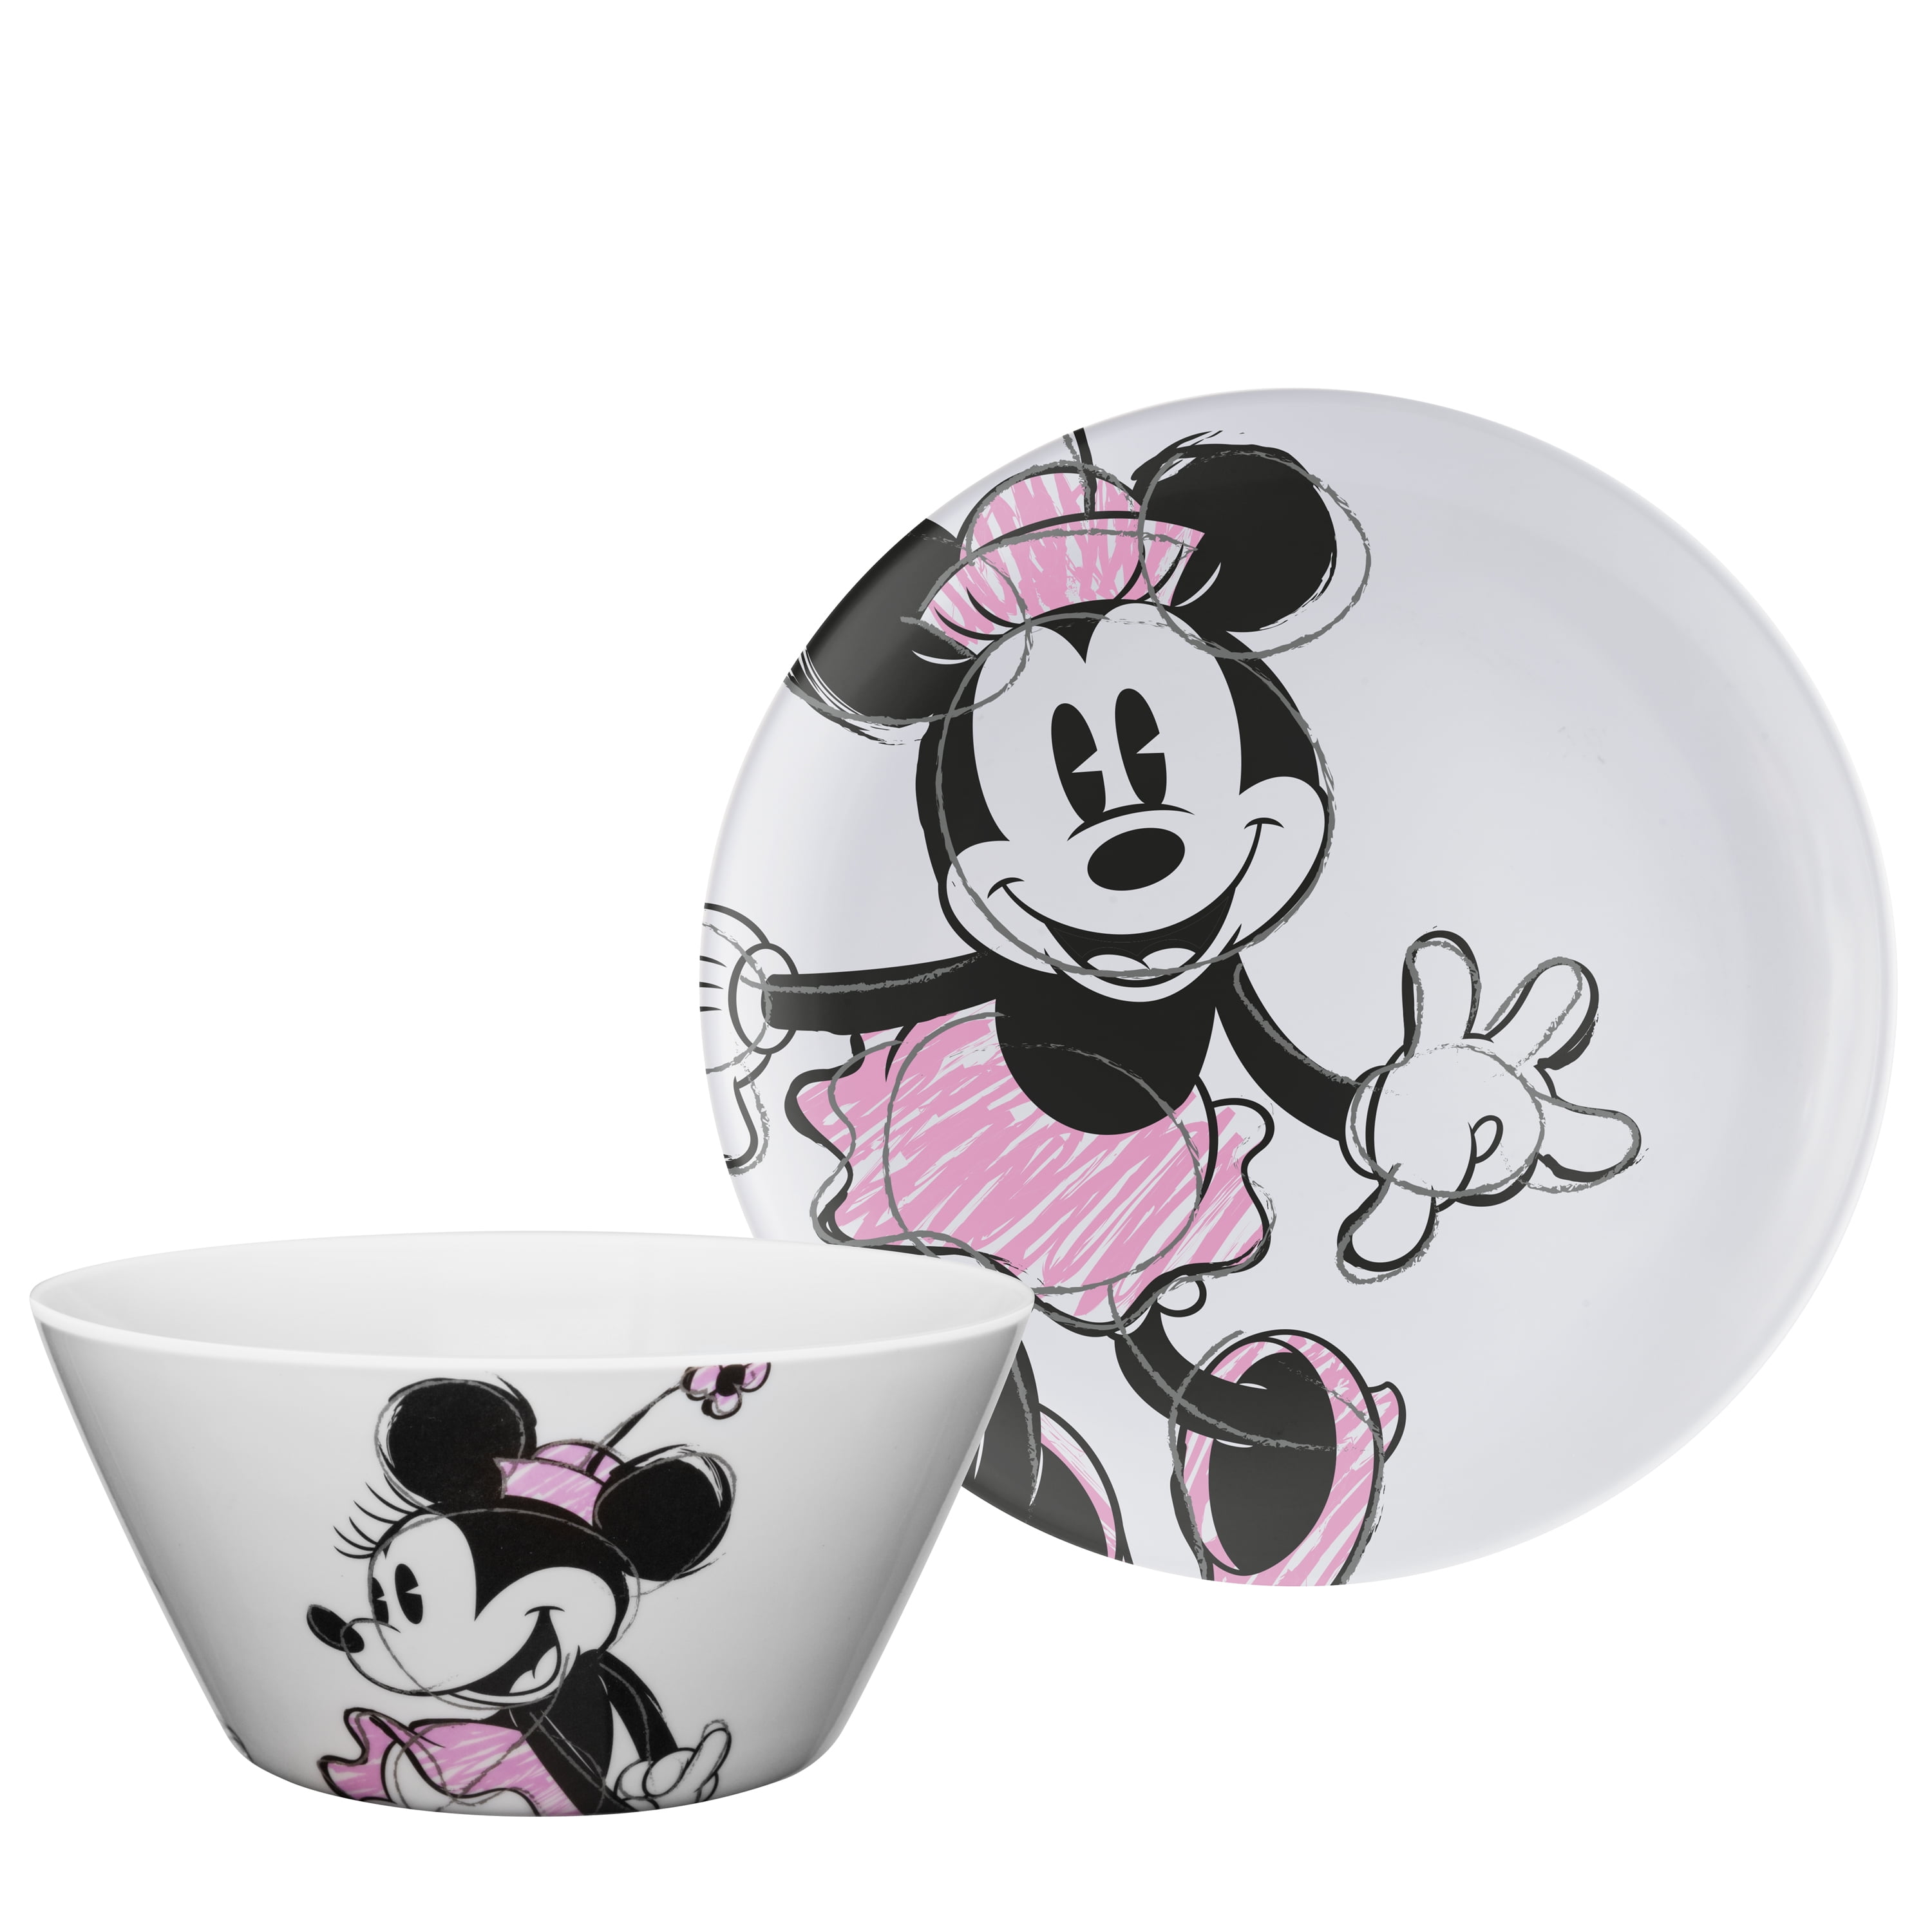 Zak Disney Mickey Mouse 2 pcs Dinnerware Set Durable Plastic Plate Bowl 